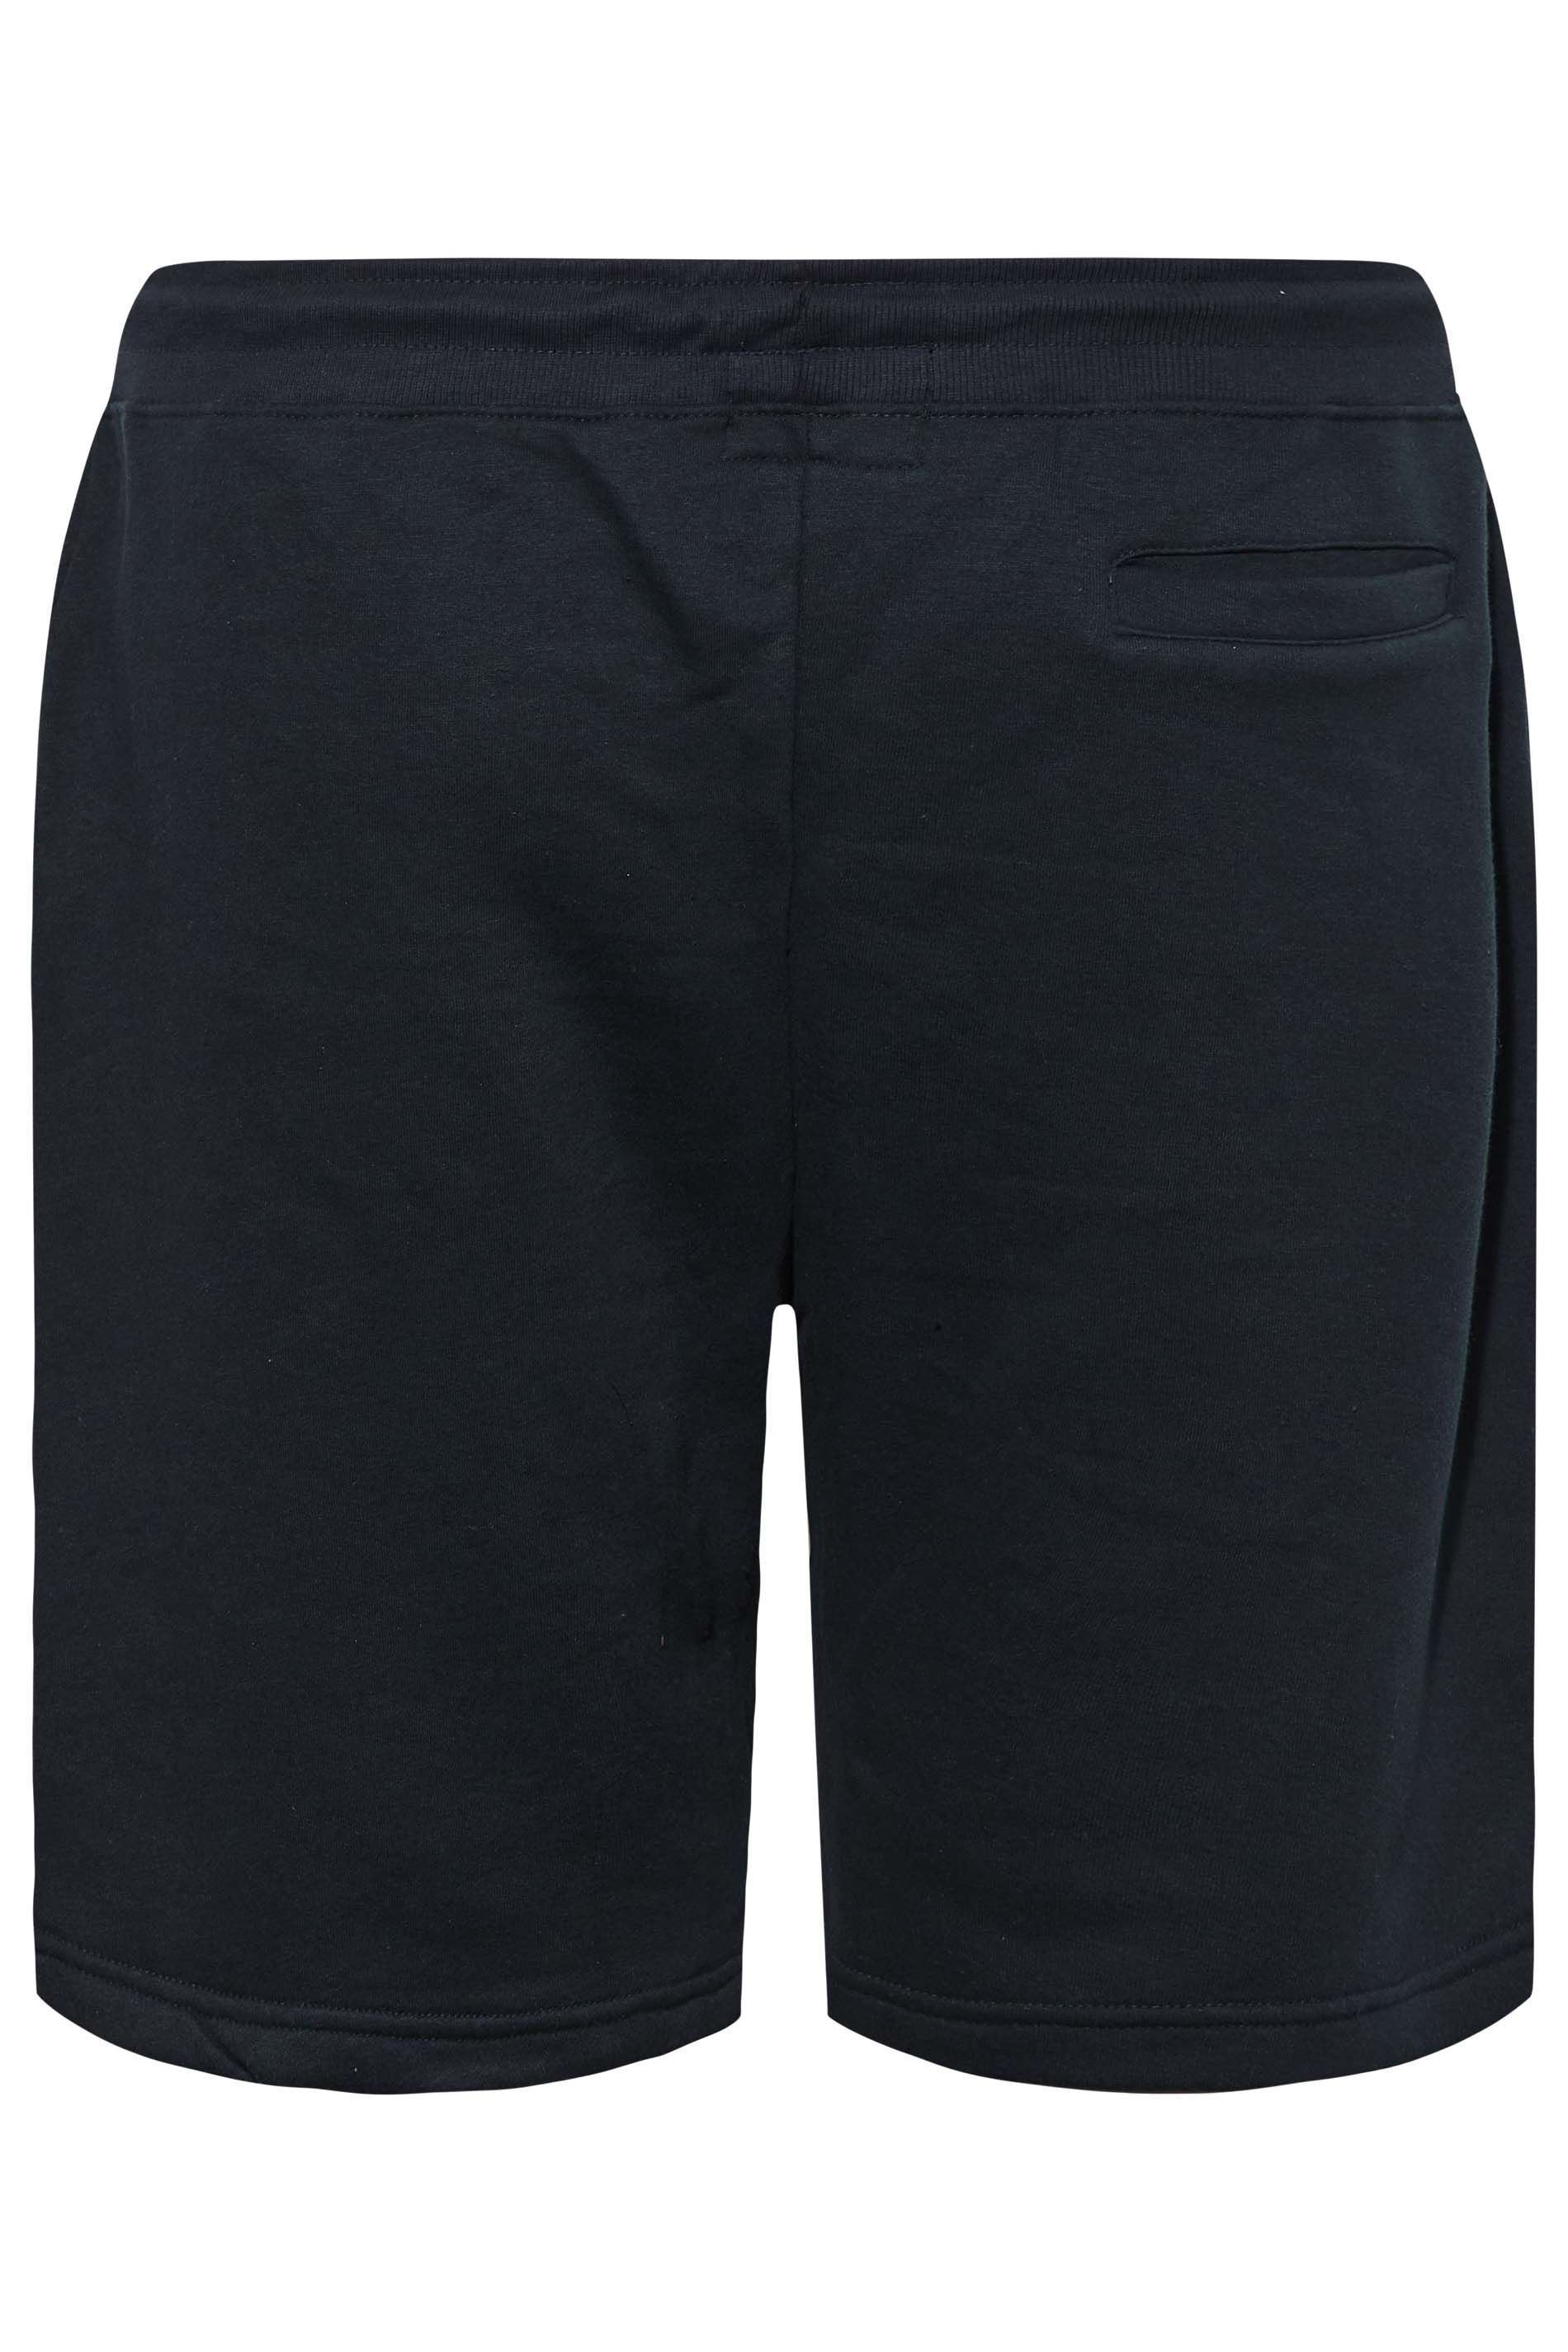 BadRhino Navy Blue Essential Jogger Shorts | BadRhino